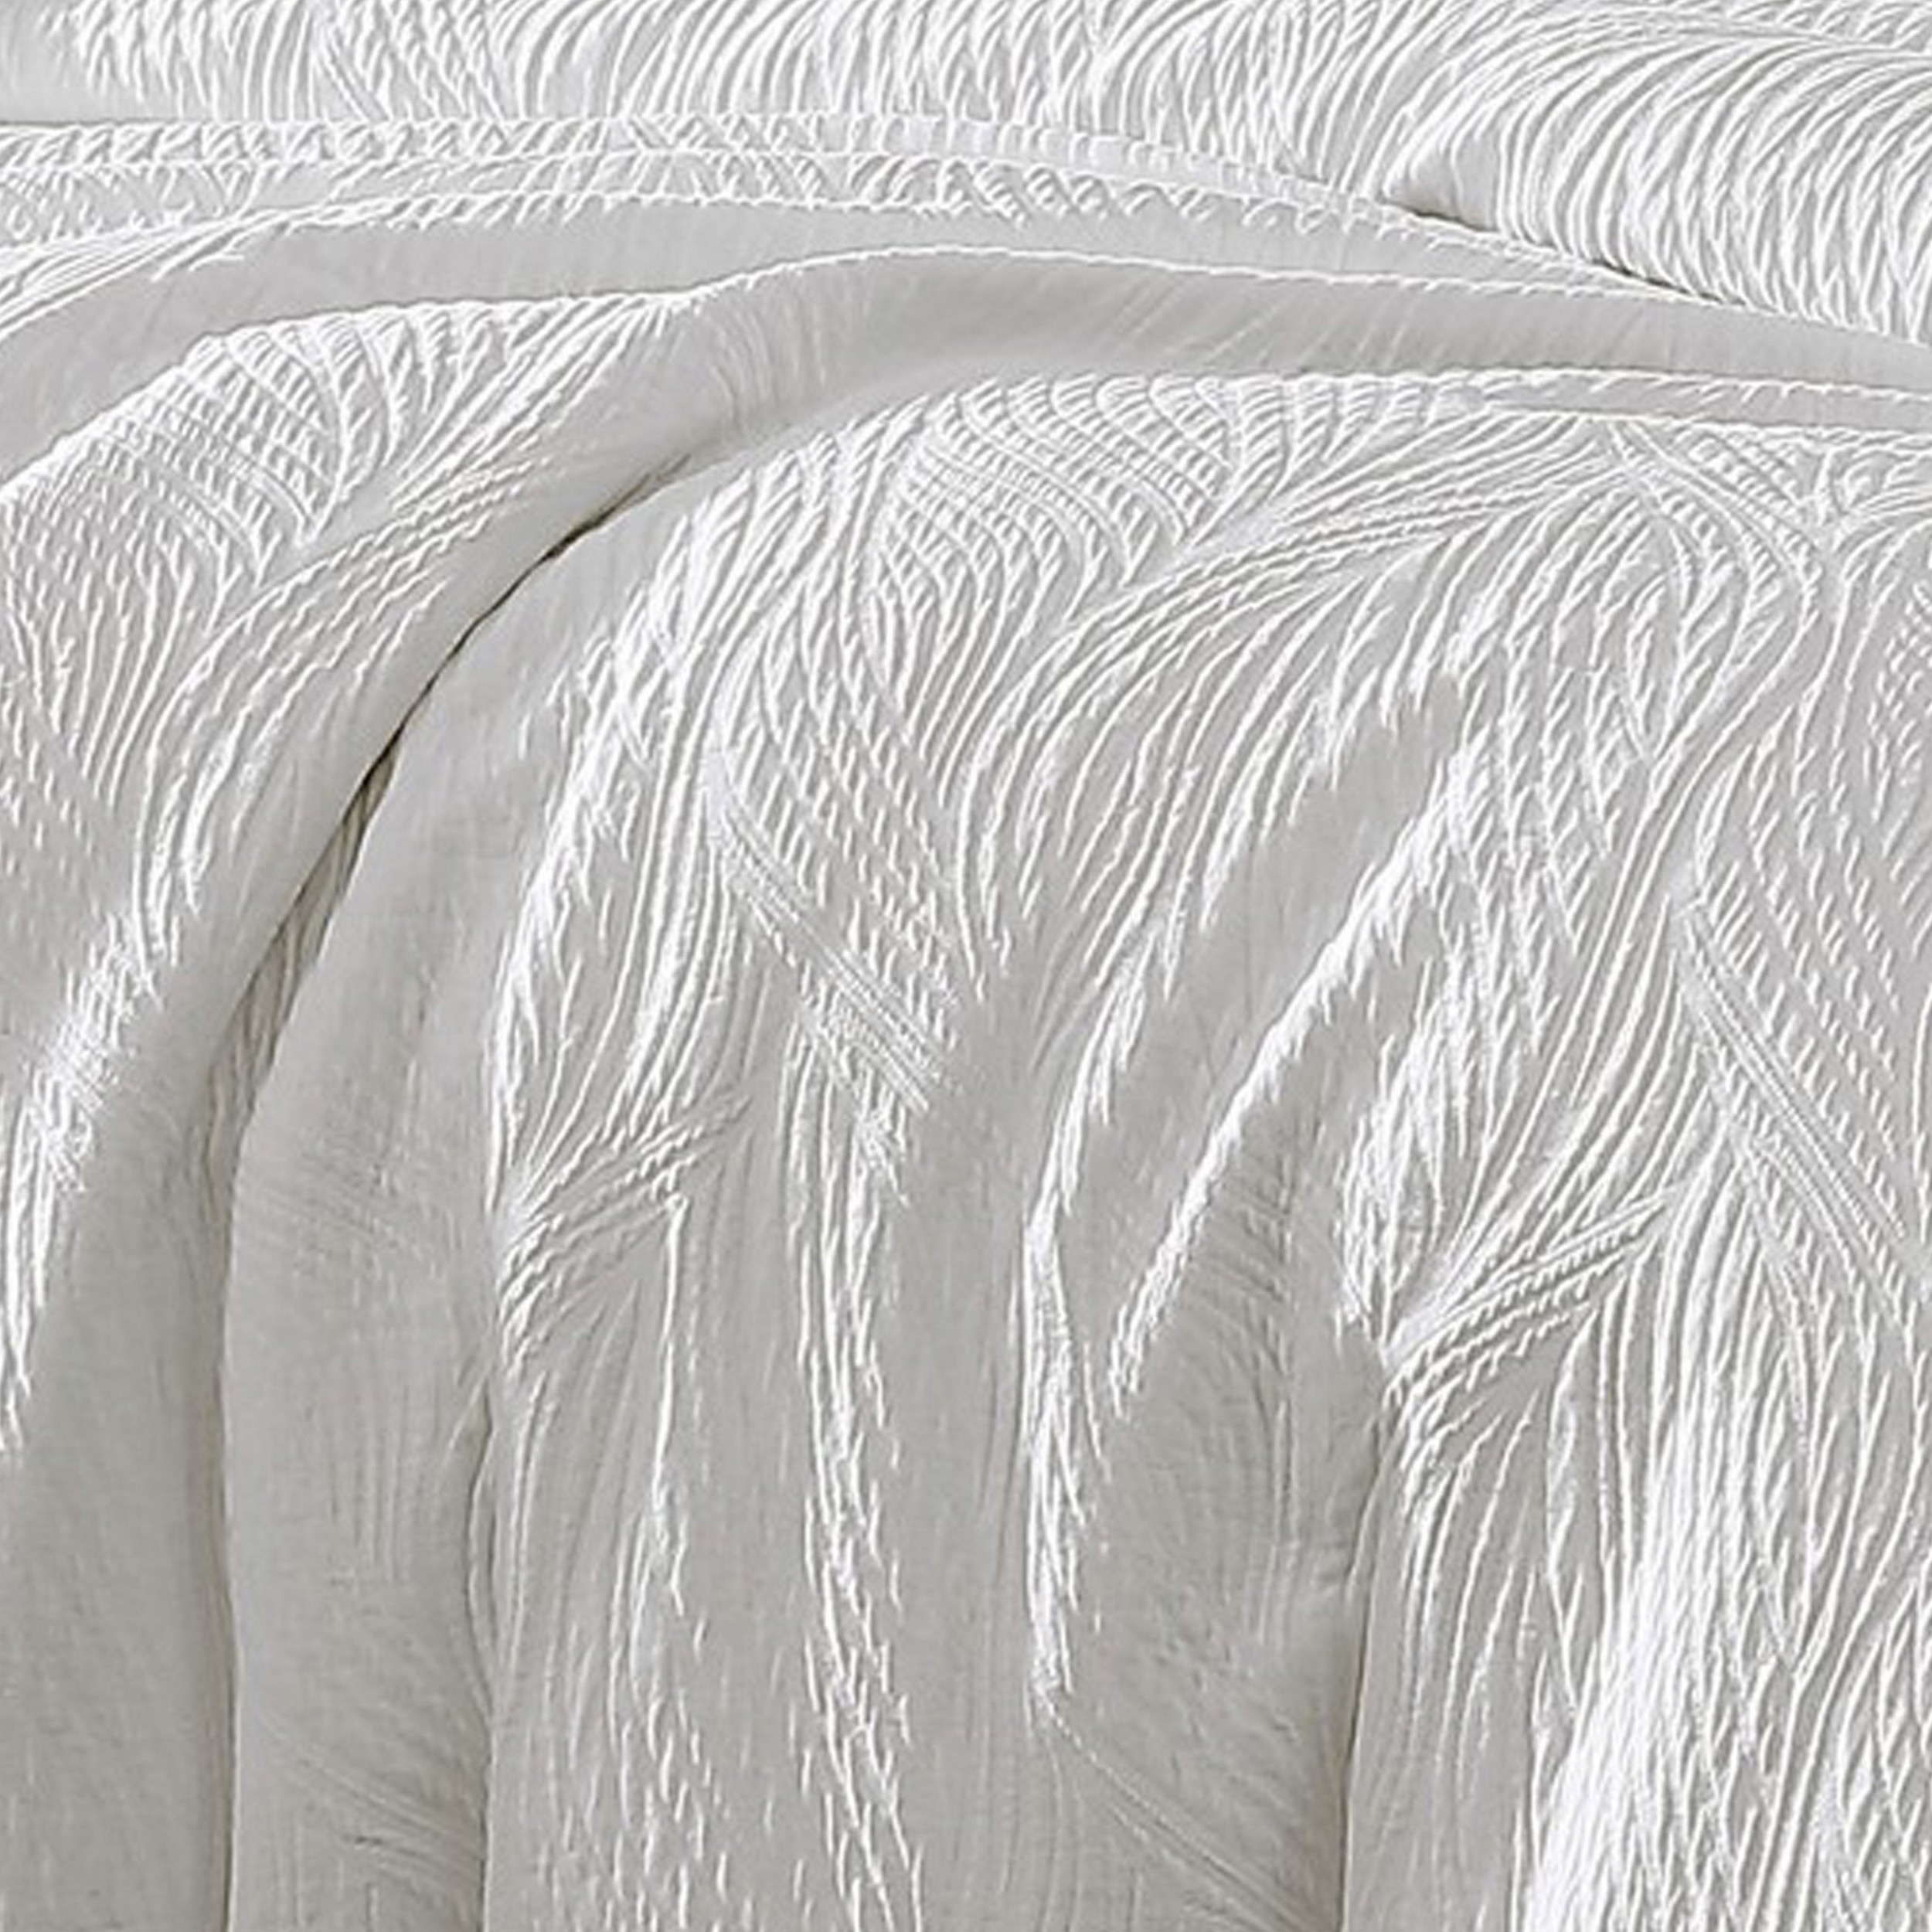 Levi 4 Piece Queen Duvet Comforter Set, White Wavy Matelasse Woven Cotton - Saltoro Sherpi